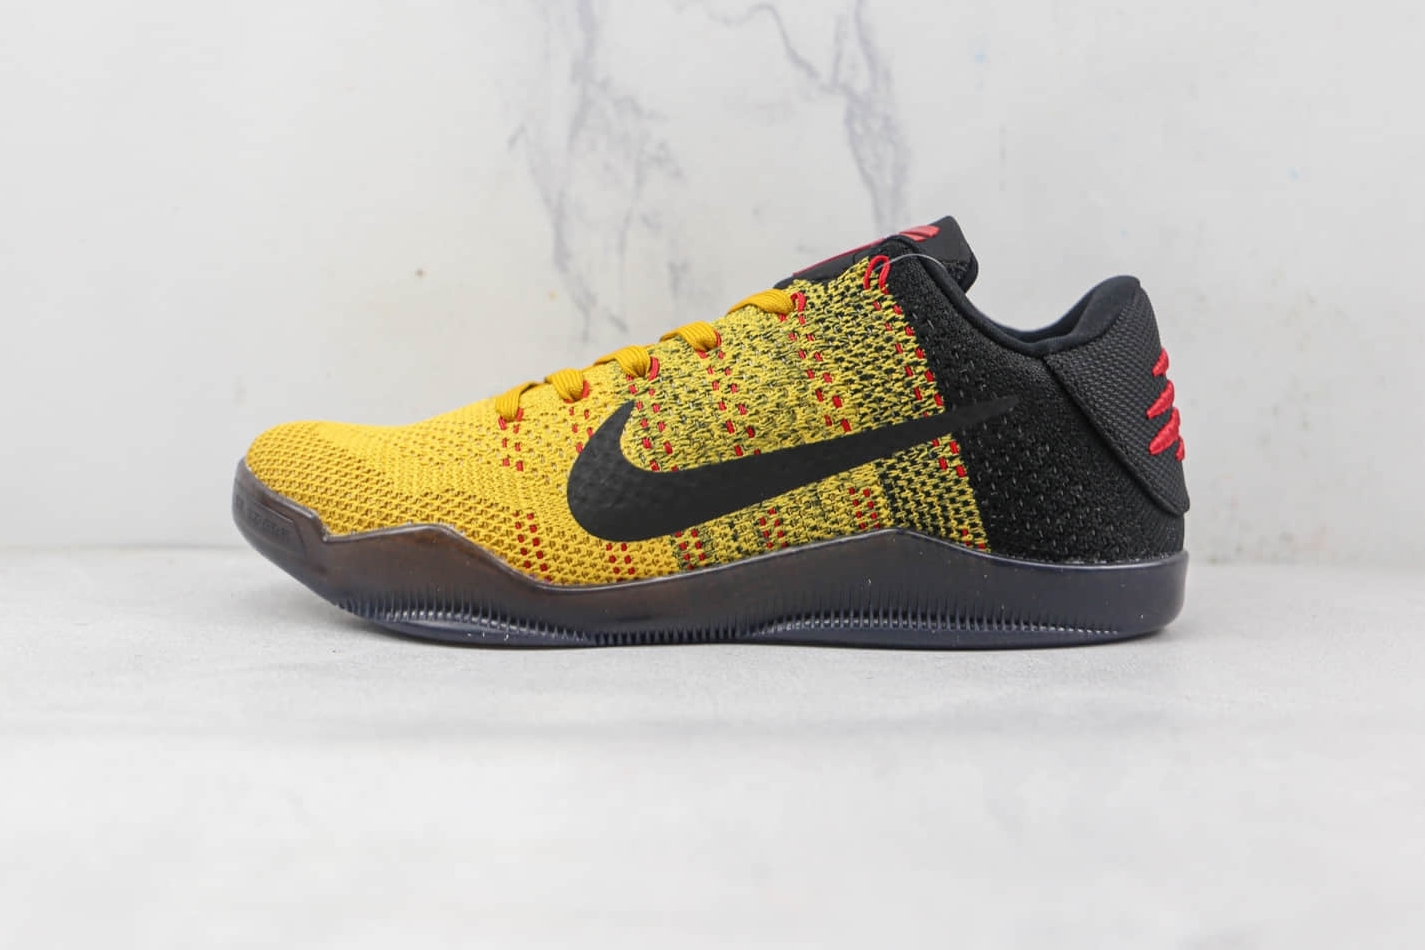 Nike Kobe 11 Elite Low 'Bruce Lee' 822675-706 - Shop now for iconic Kobe sneakers!